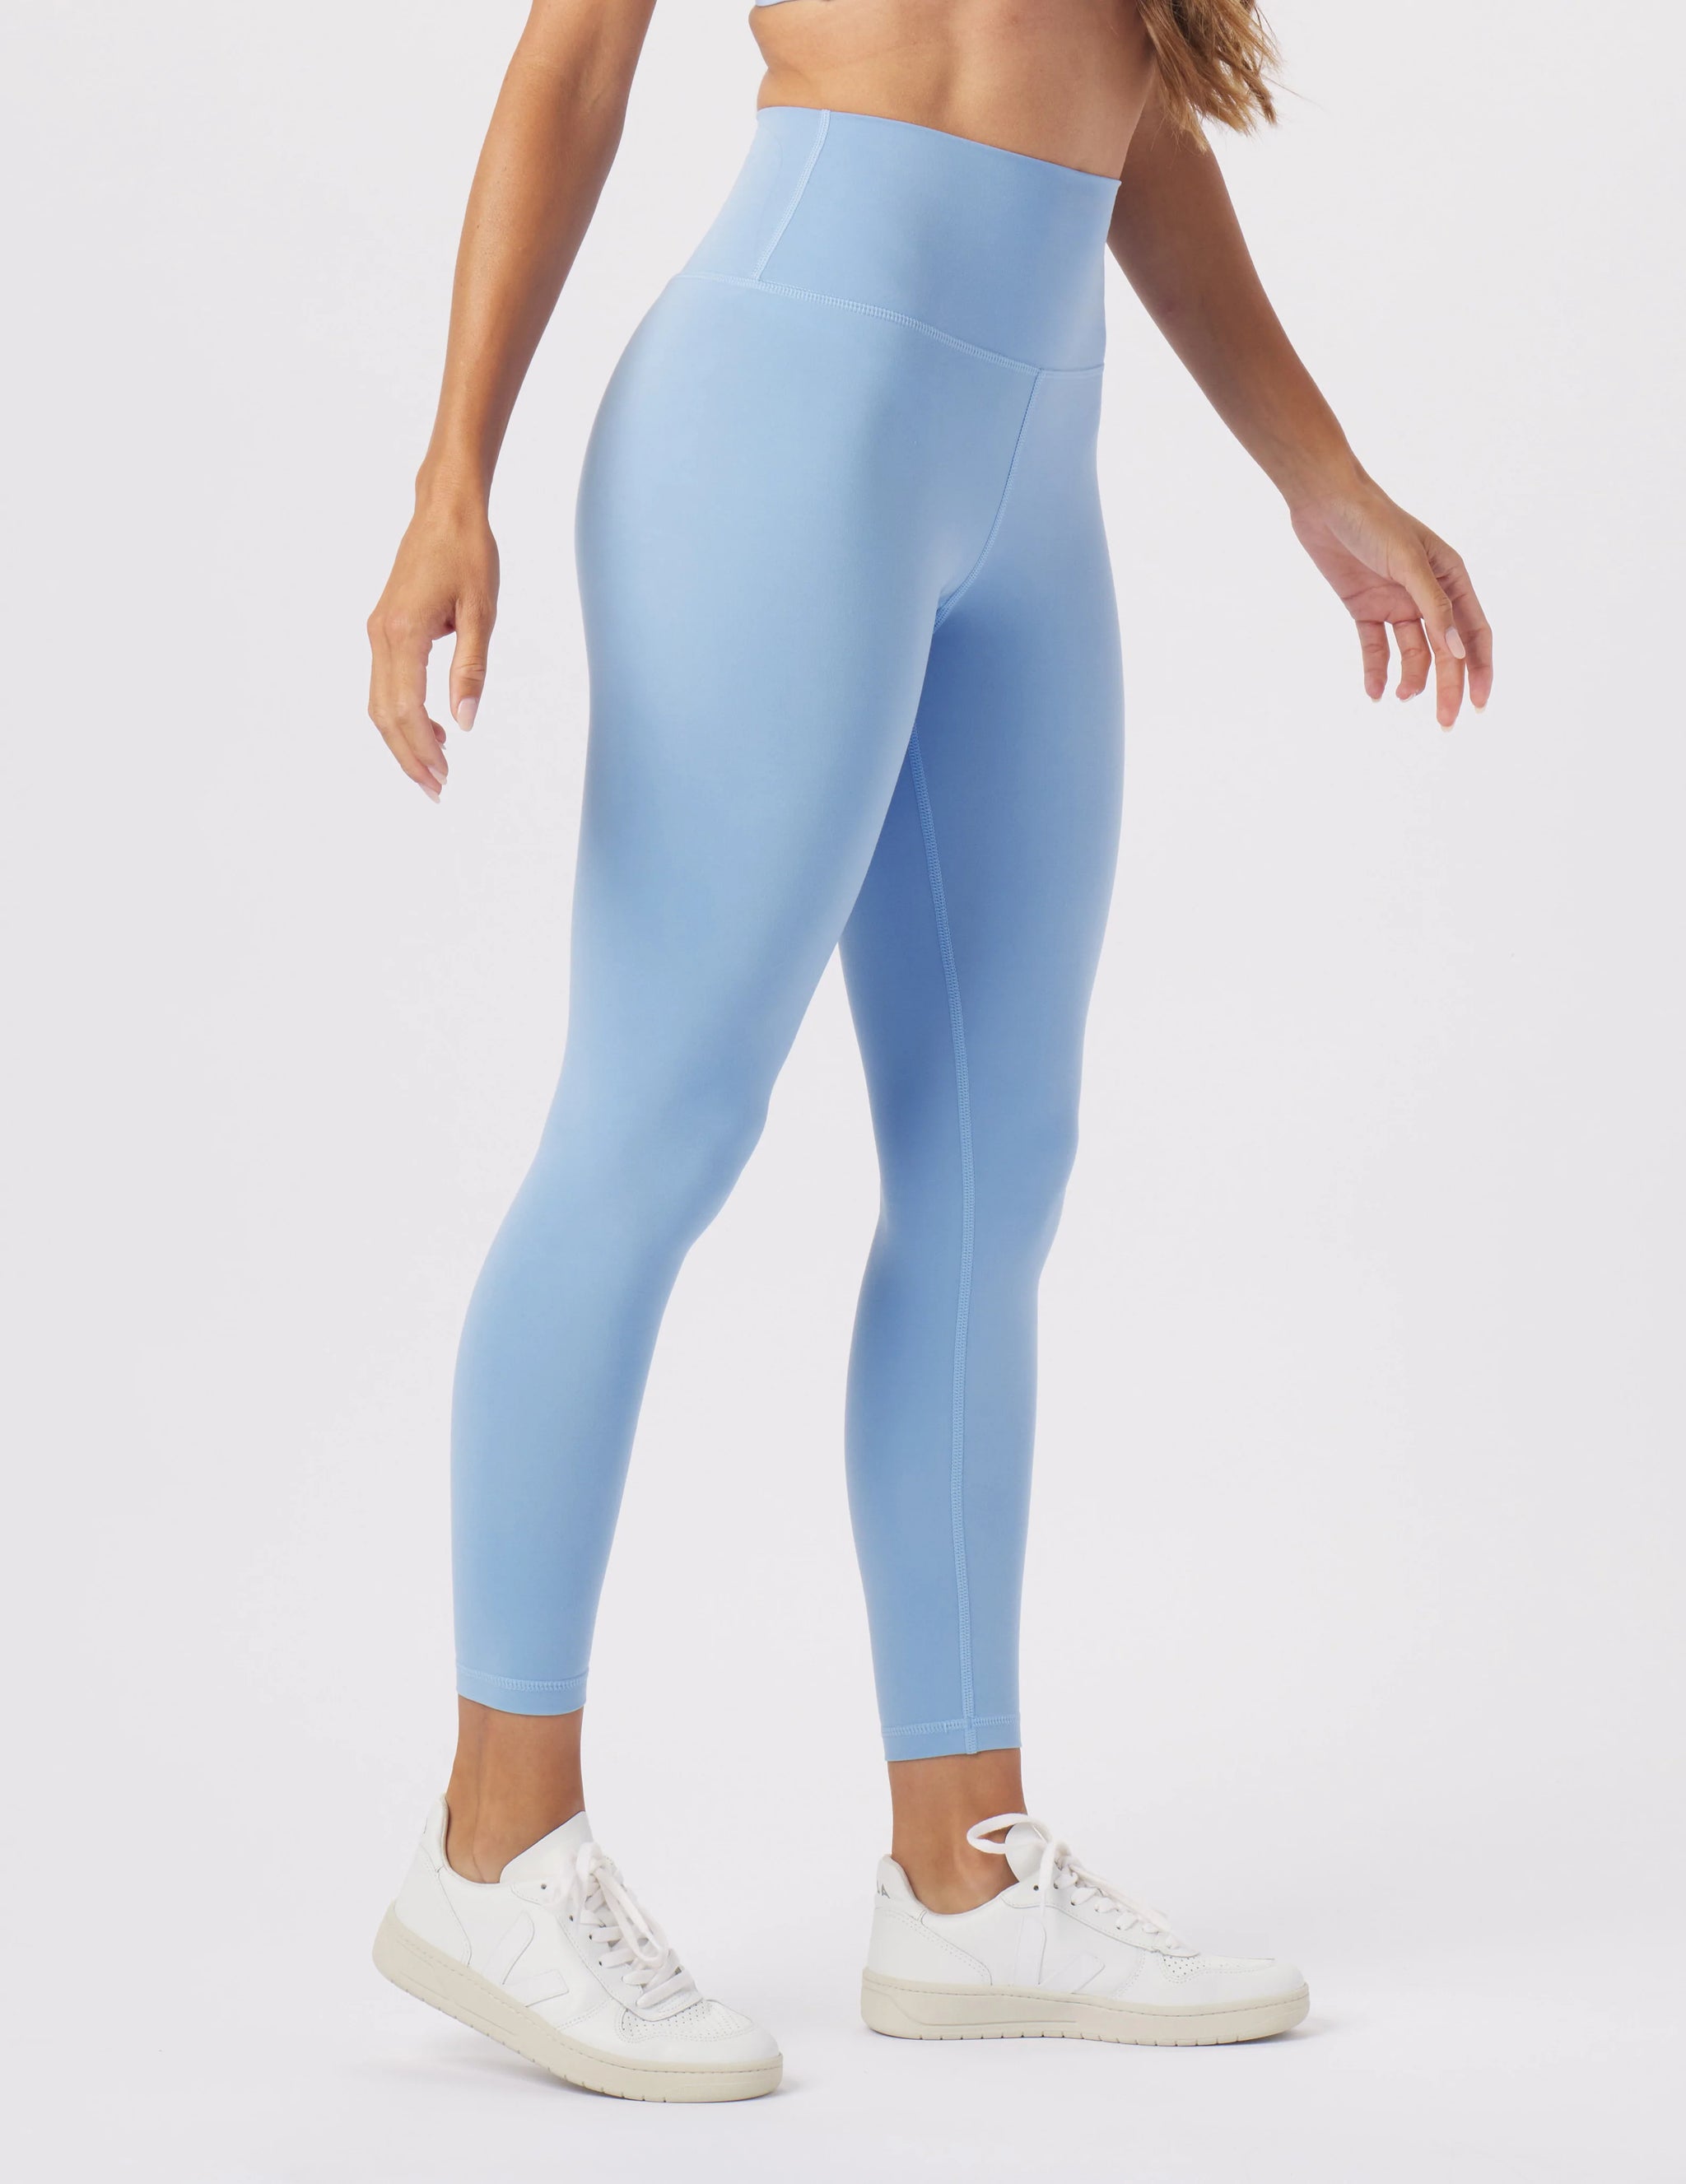 JOLGER Women's Polyester Indigo Blue High Waist Tights/Legging